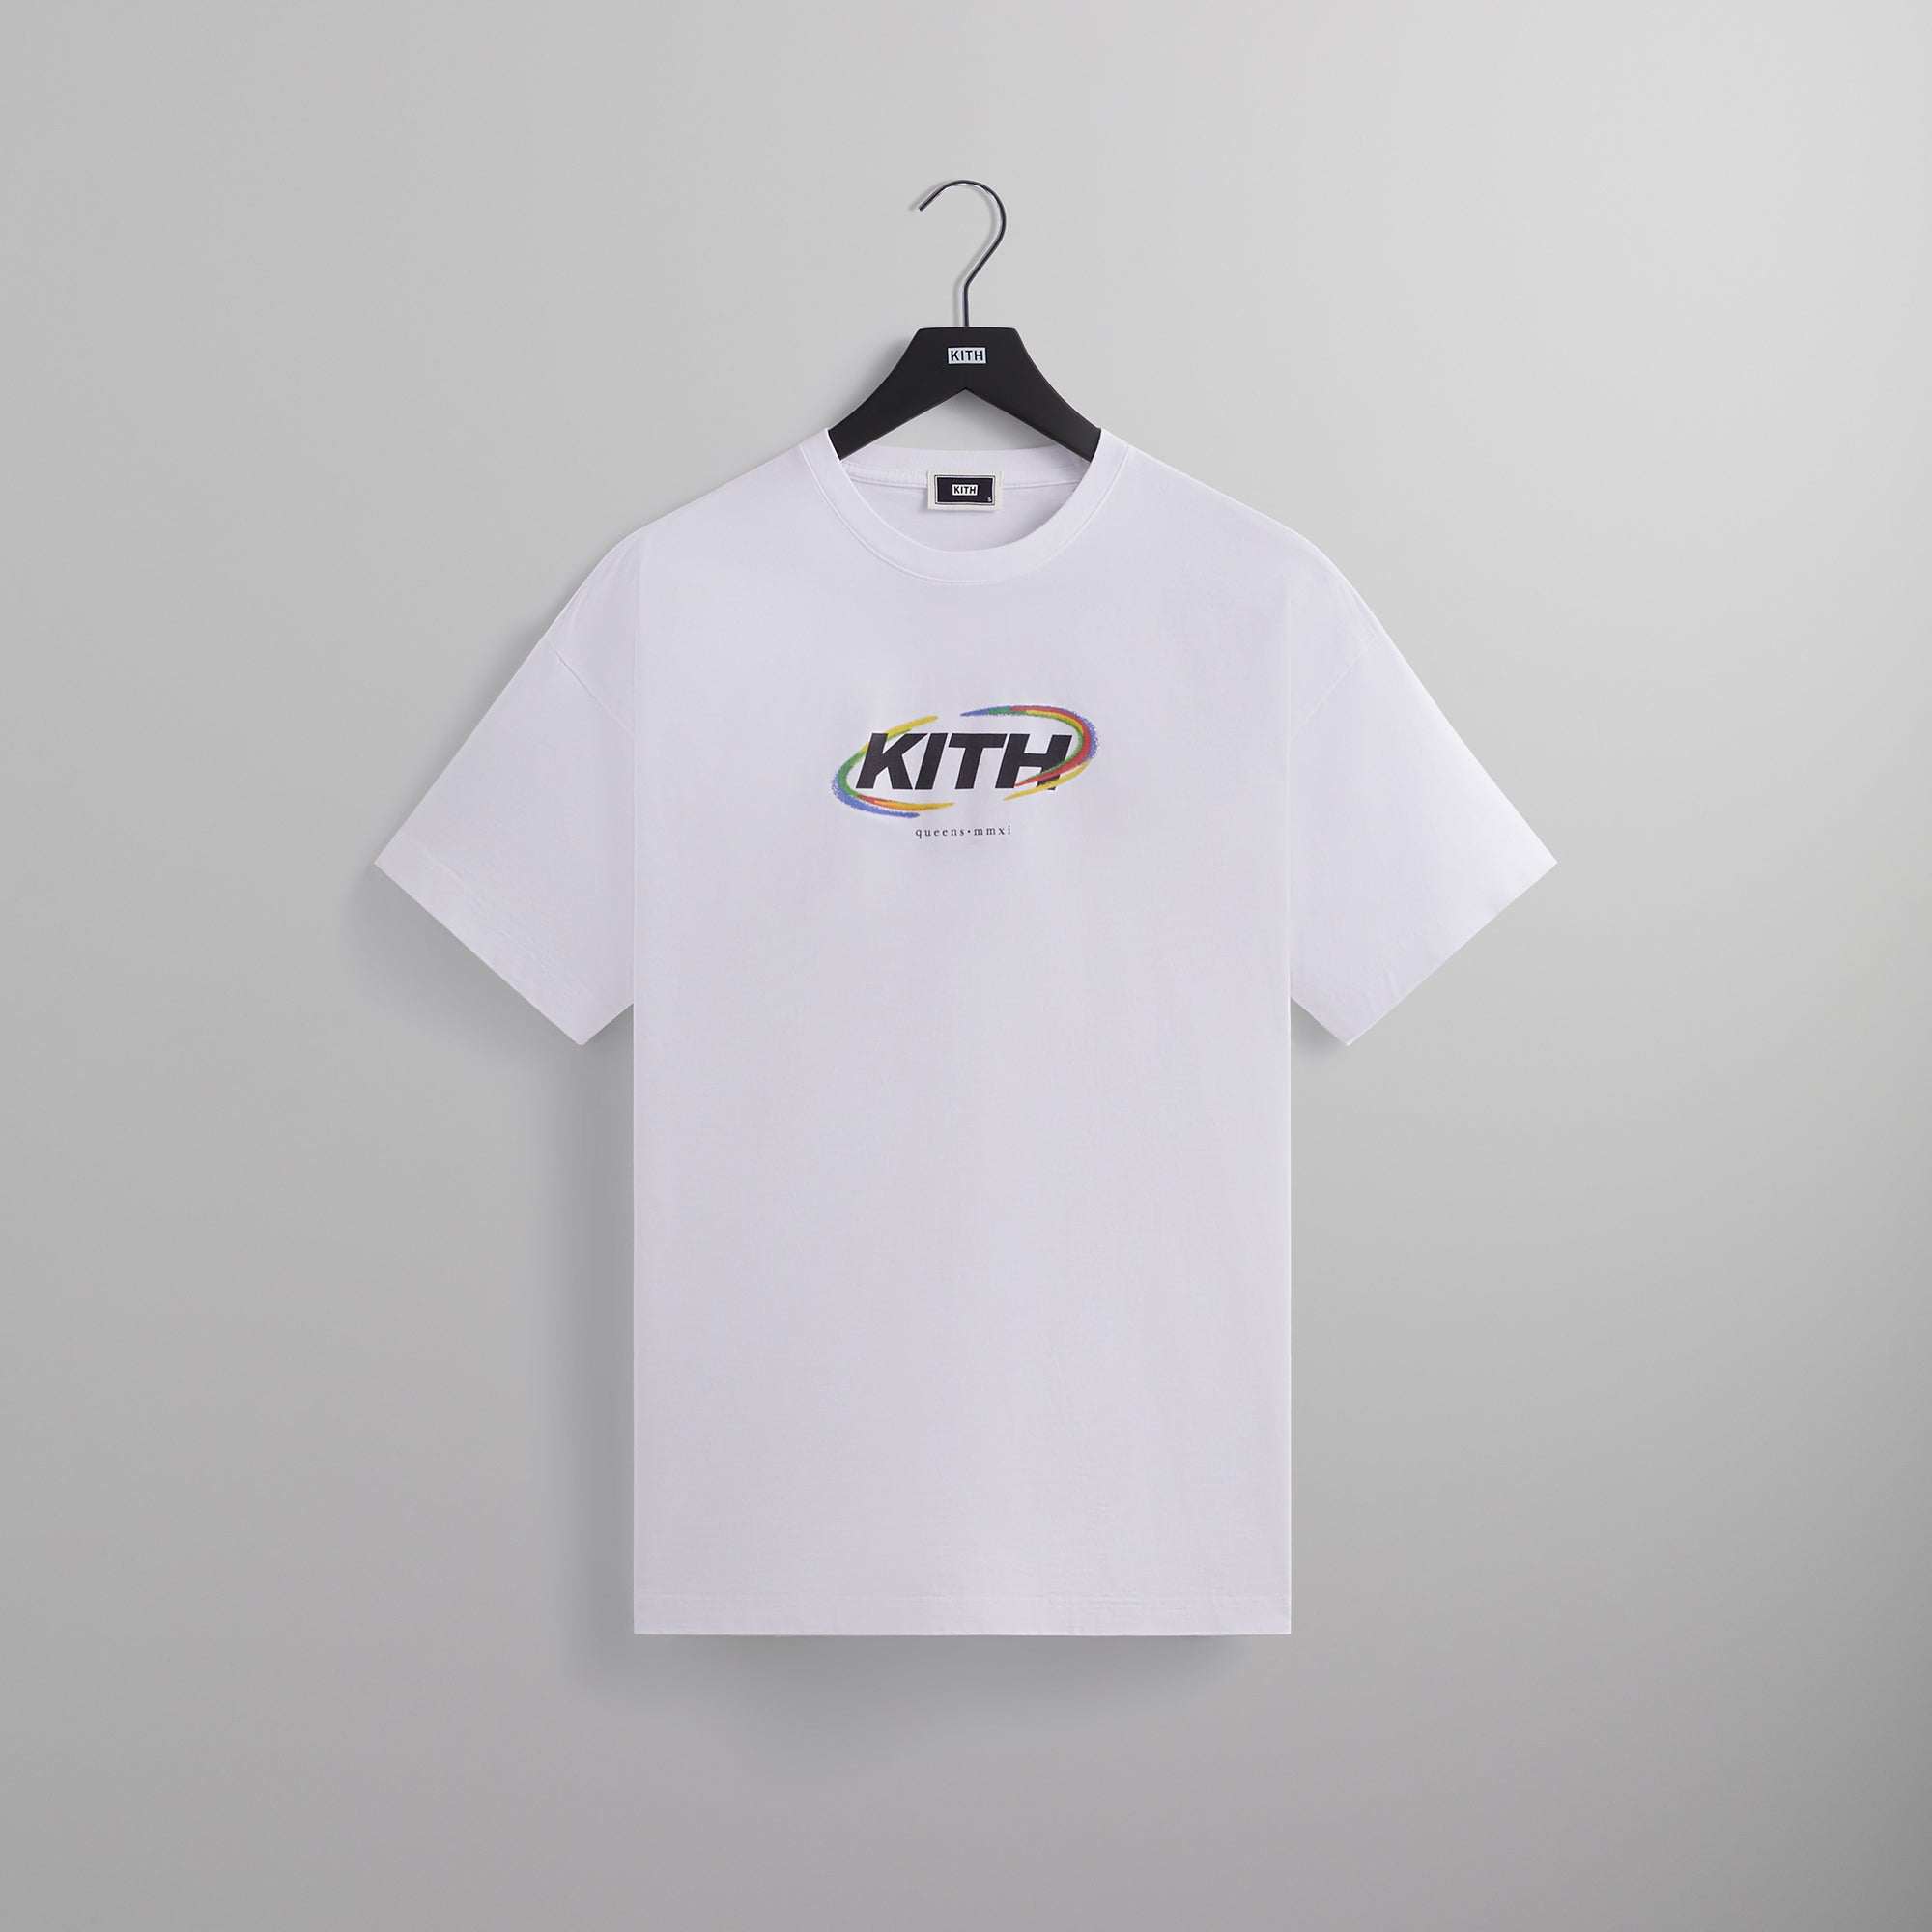 KITH /キス 東京限定ボックスロゴ ホワイト XS - Tシャツ/カットソー 